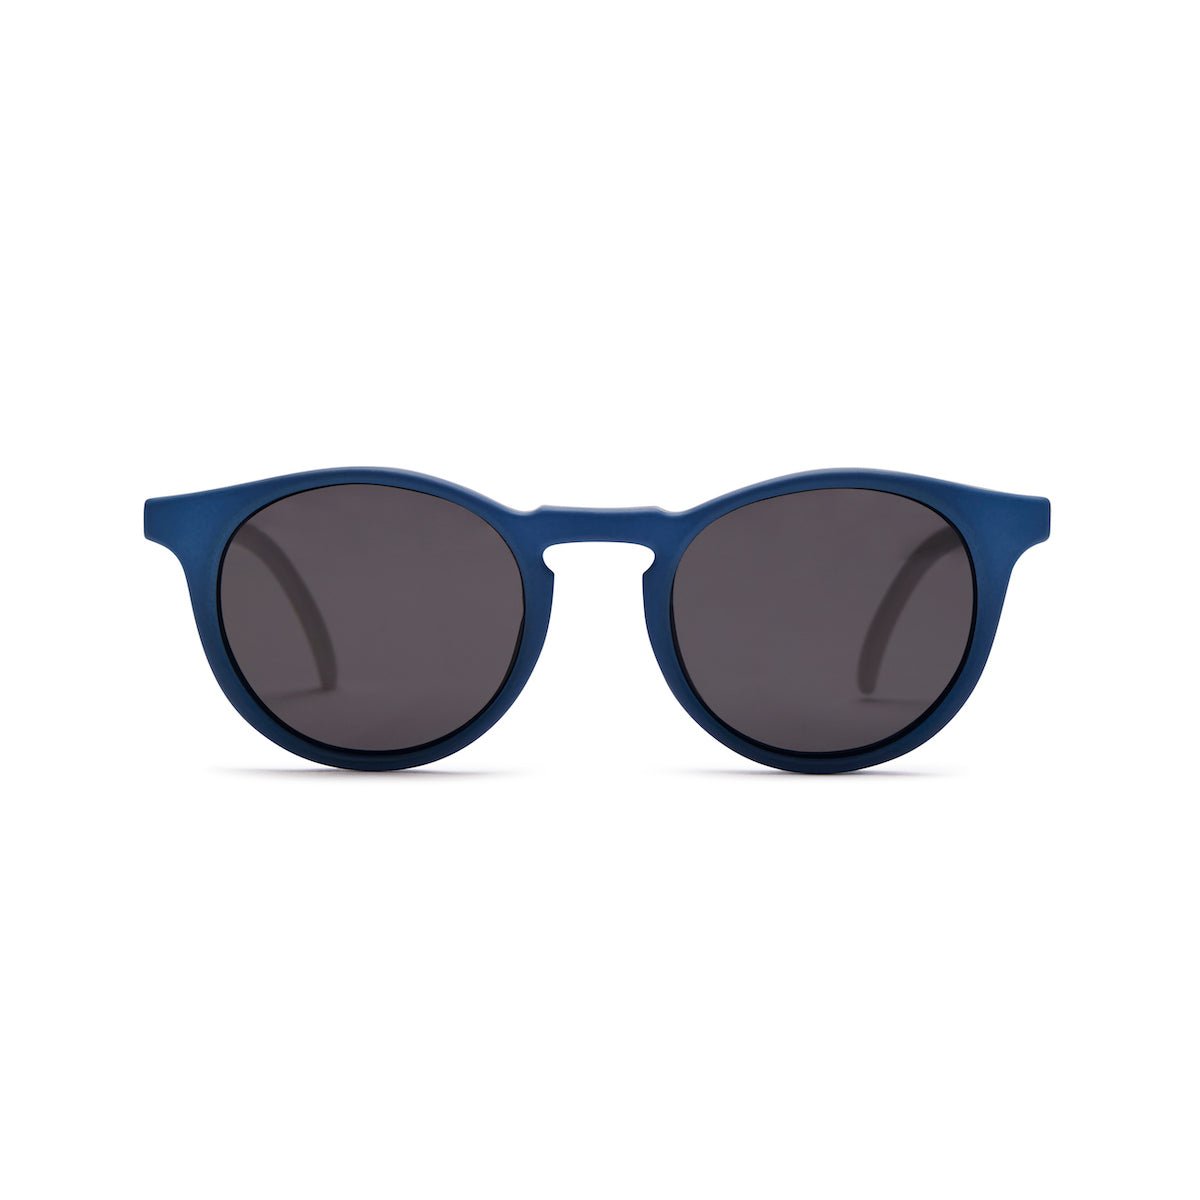 Kids Sunglasses 3+ Years | Navy Fade - Sunglasses - ELLIE